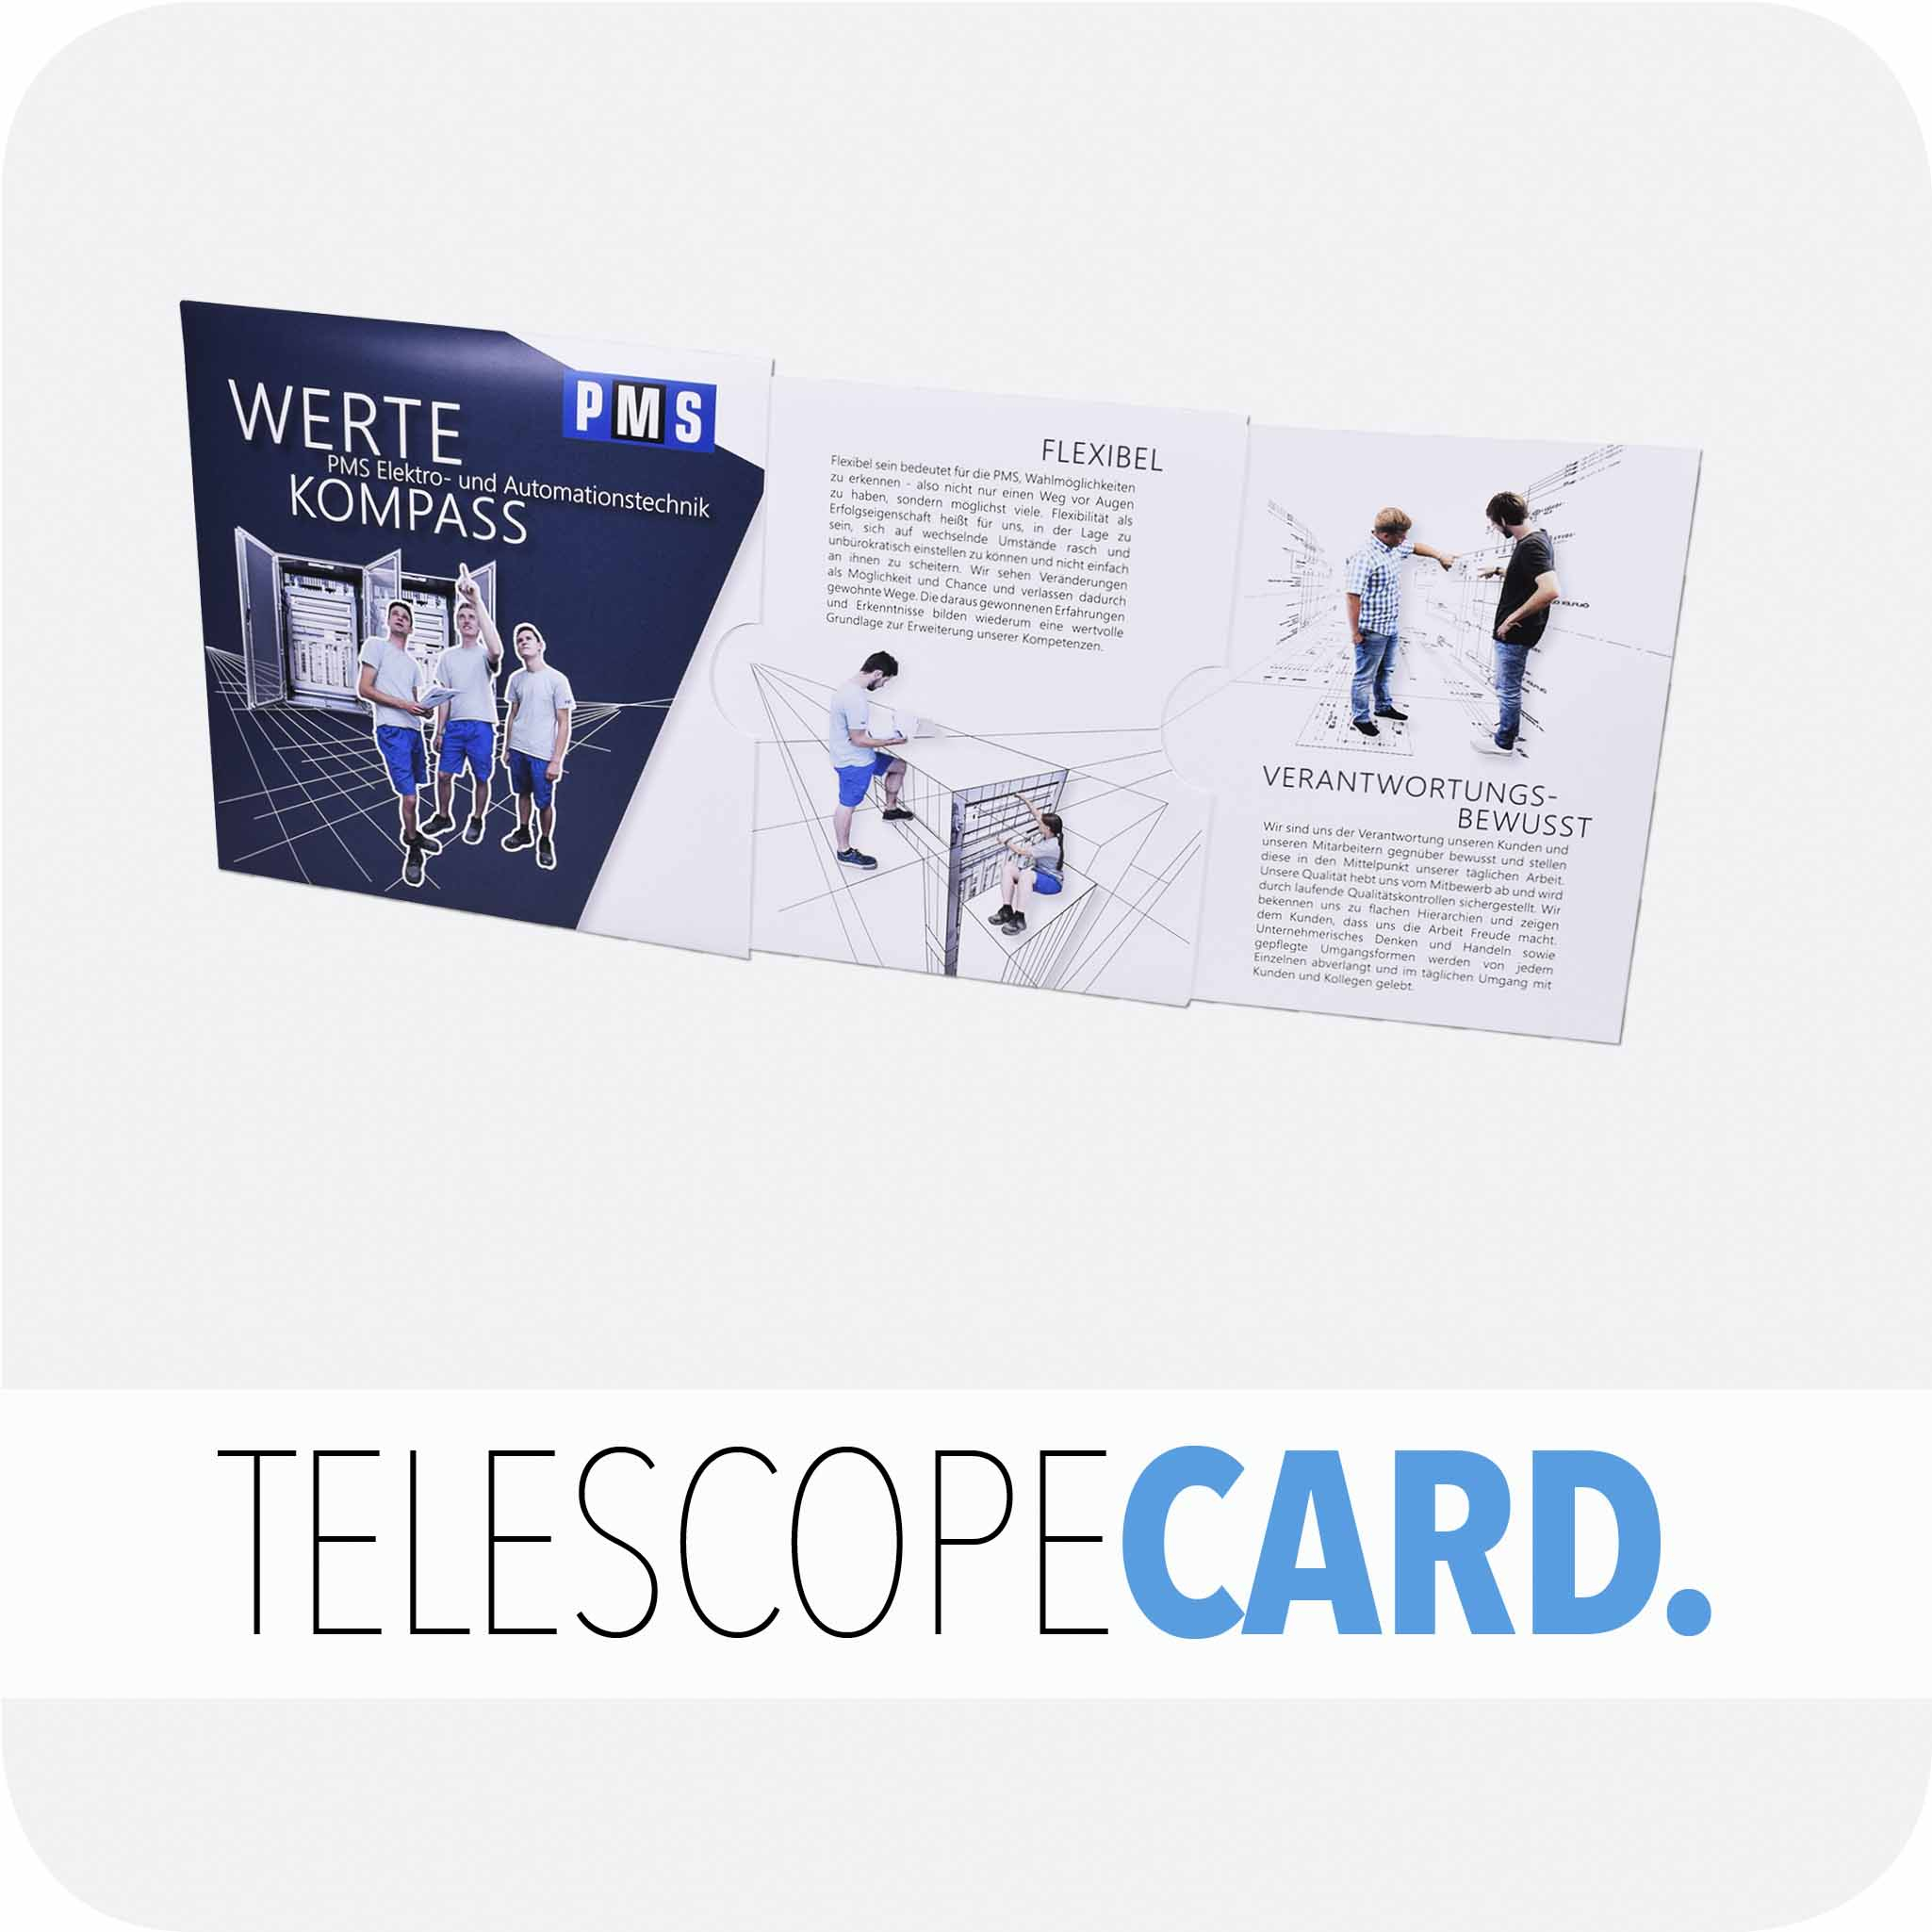 Telescope card